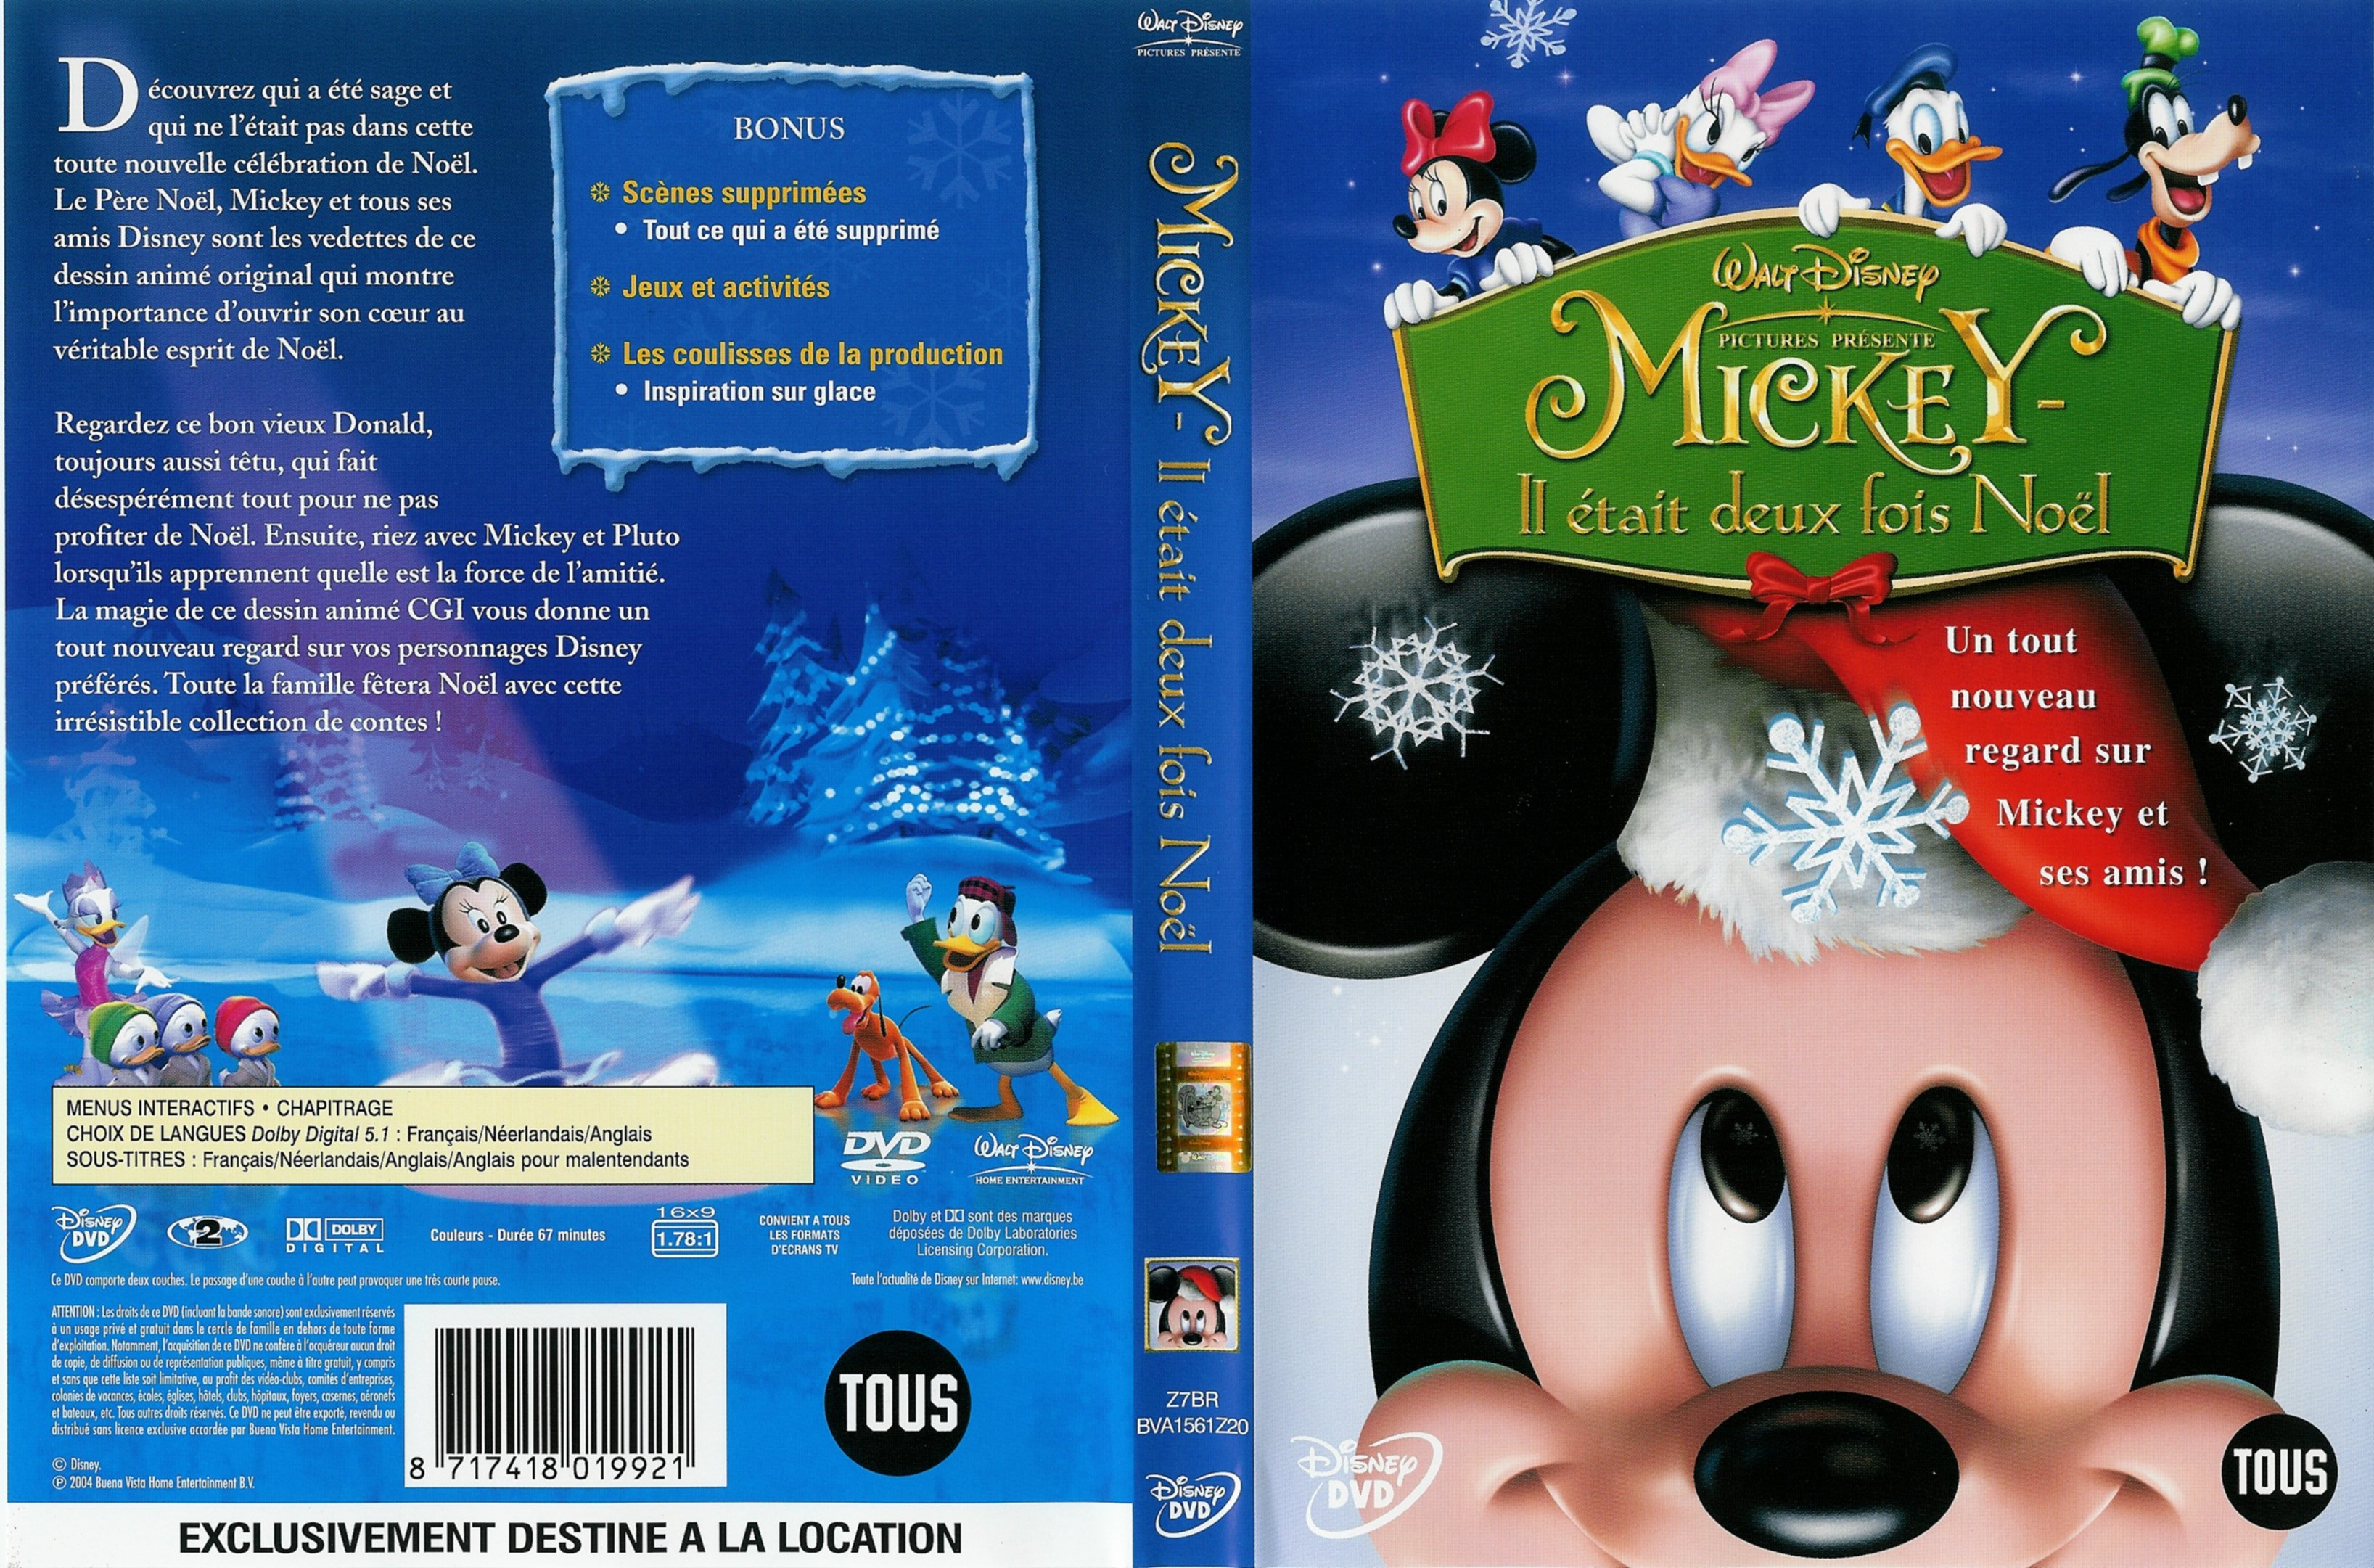 Jaquette DVD Mickey il tait deux fois Noel v2